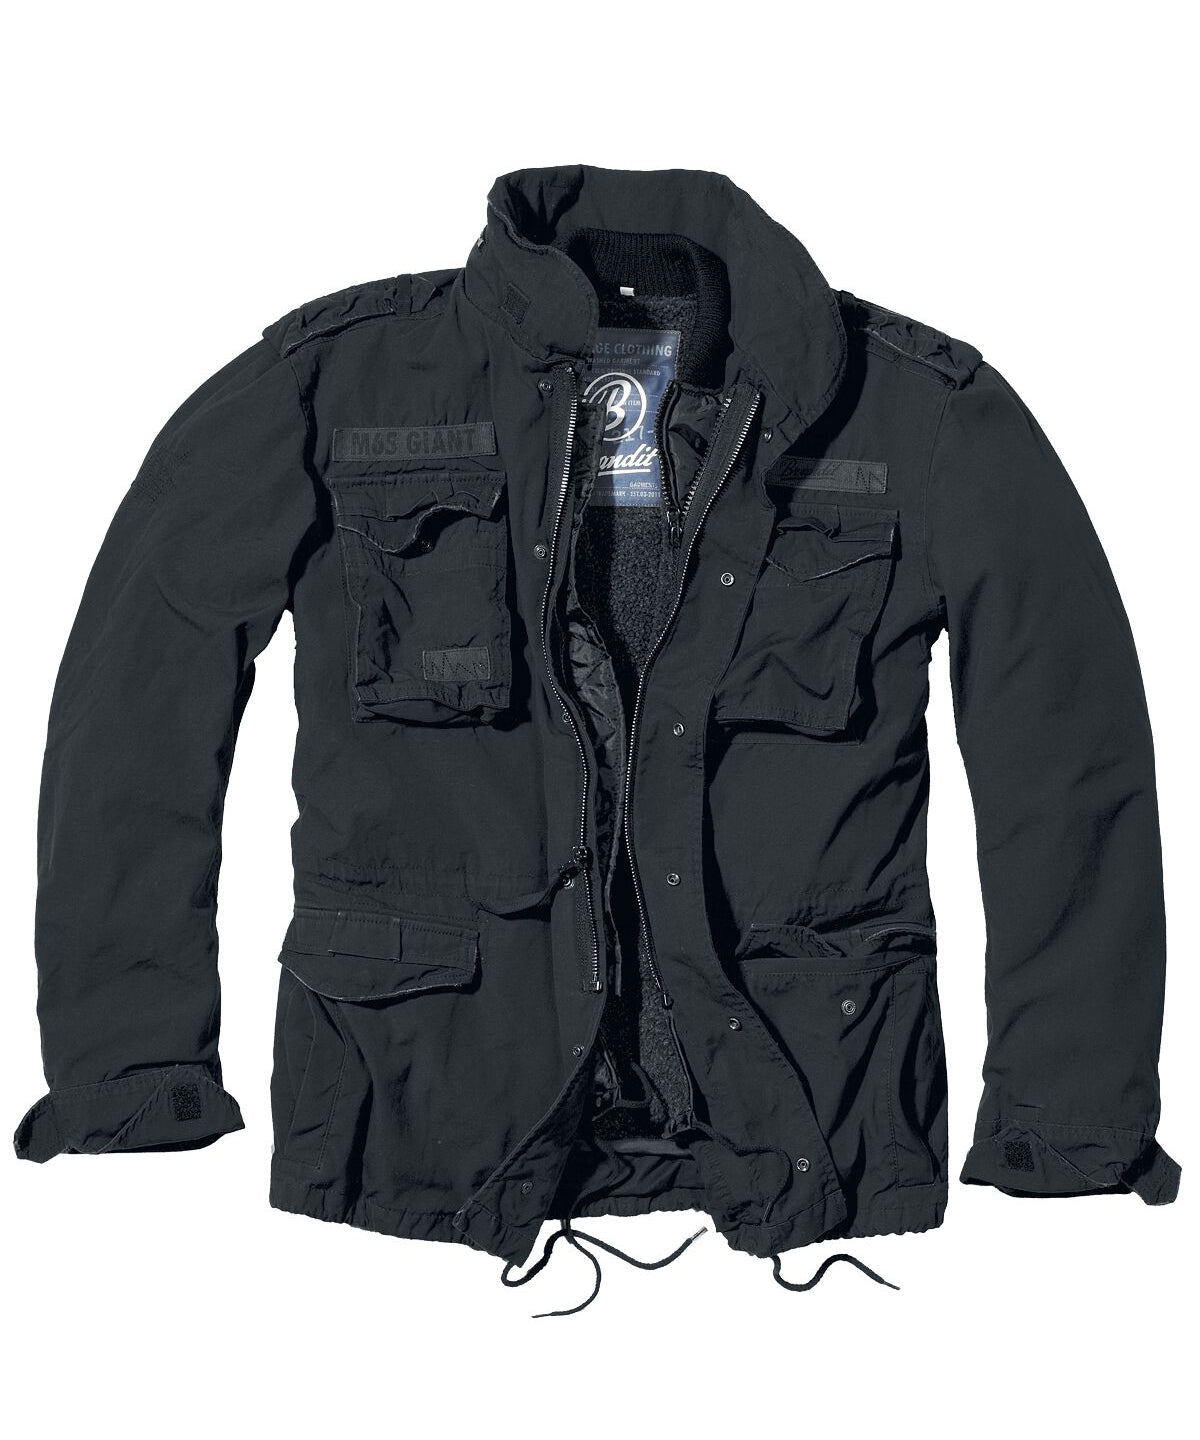 Personalised Jackets - Black Build Your Brandit M65 Giant jacket